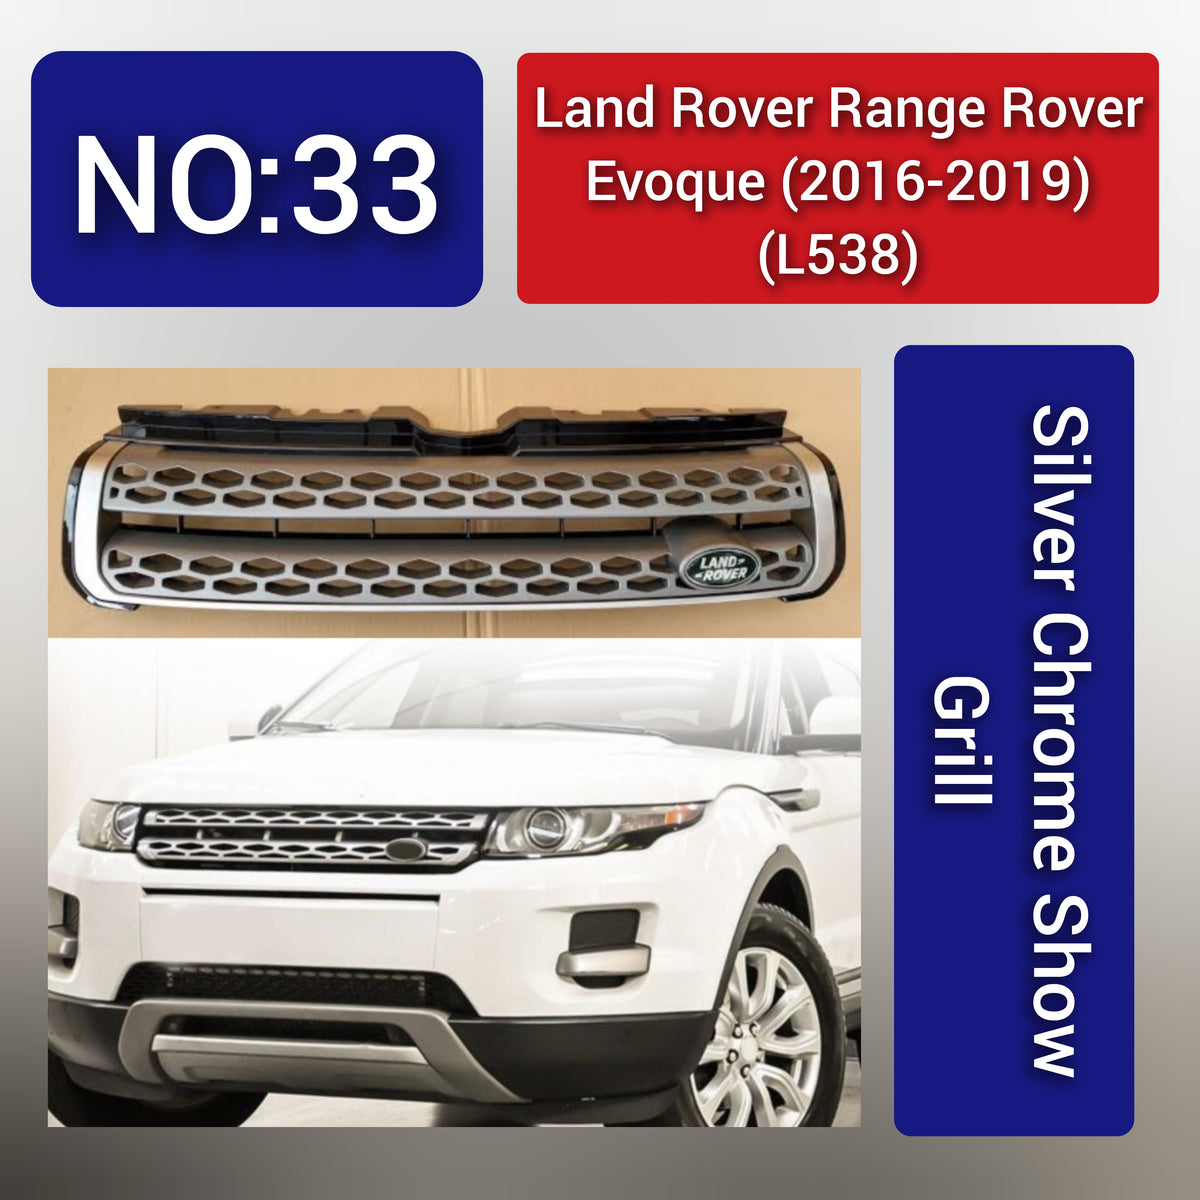 Land Rover L538 (2016-19) Range Rover Evoque Silver Chrome Show Grill Tag 33